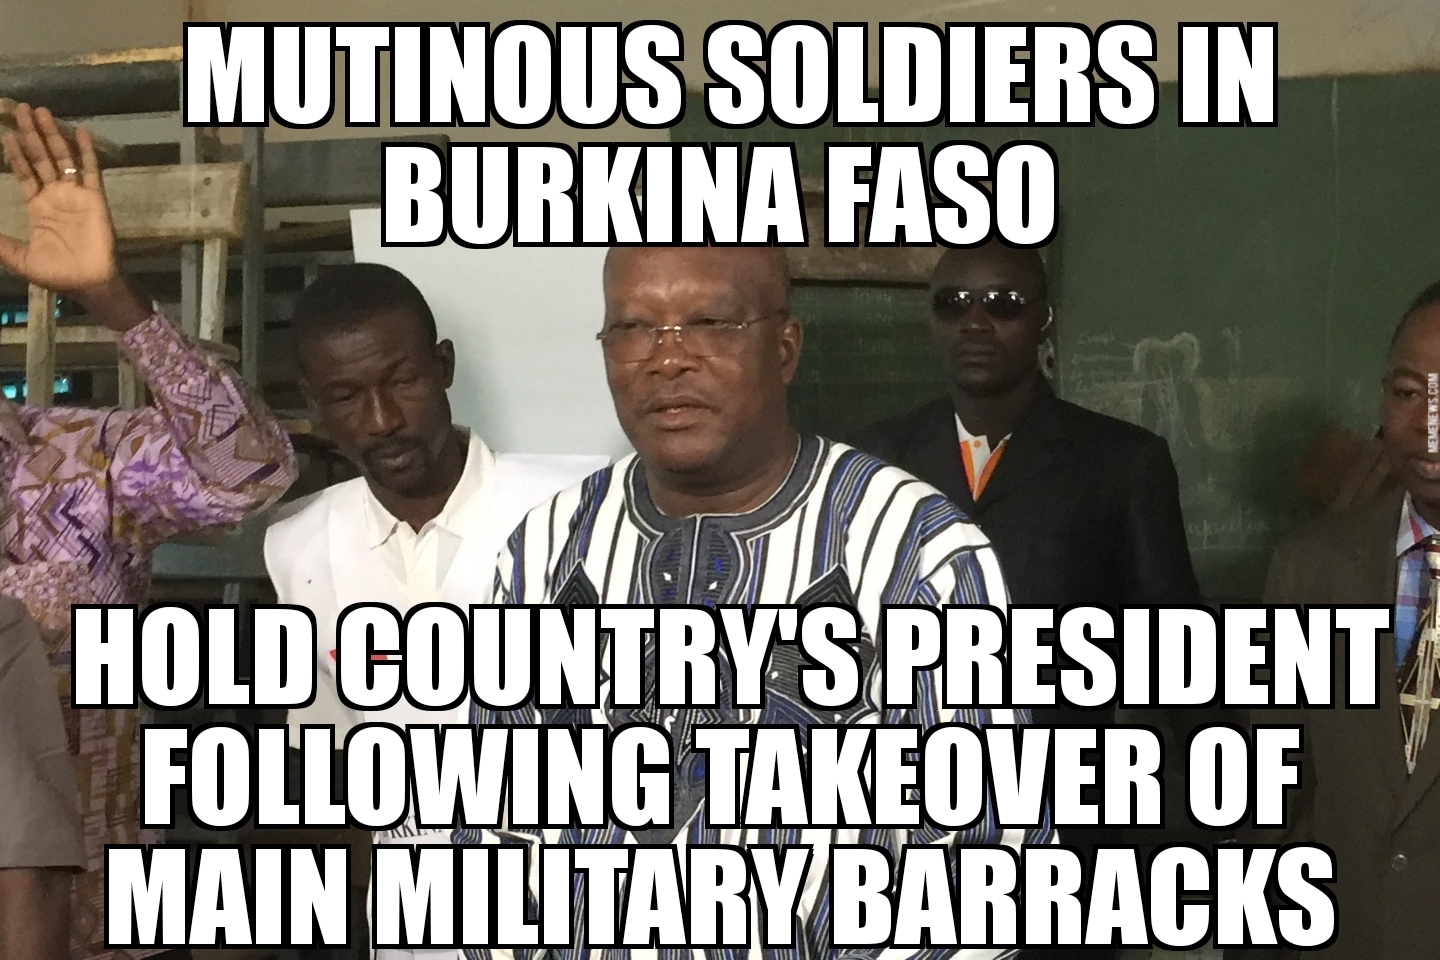 Burkina Faso mutiny